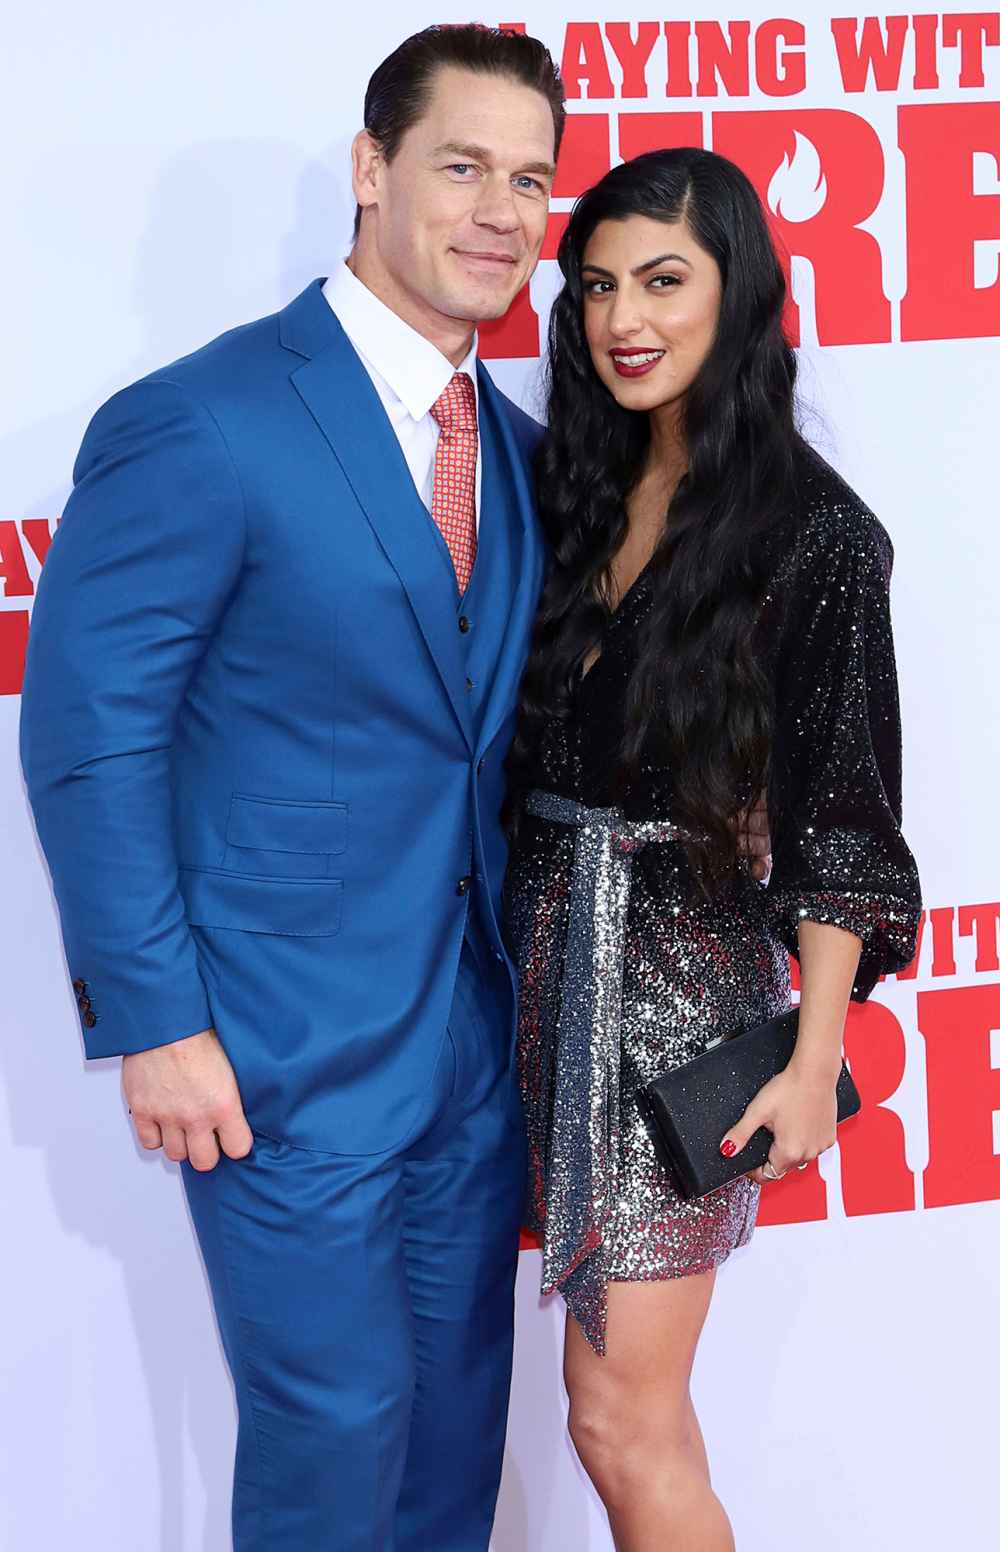 John Cena Shay Shariatzadeh Get Married Again Report Us Weekly